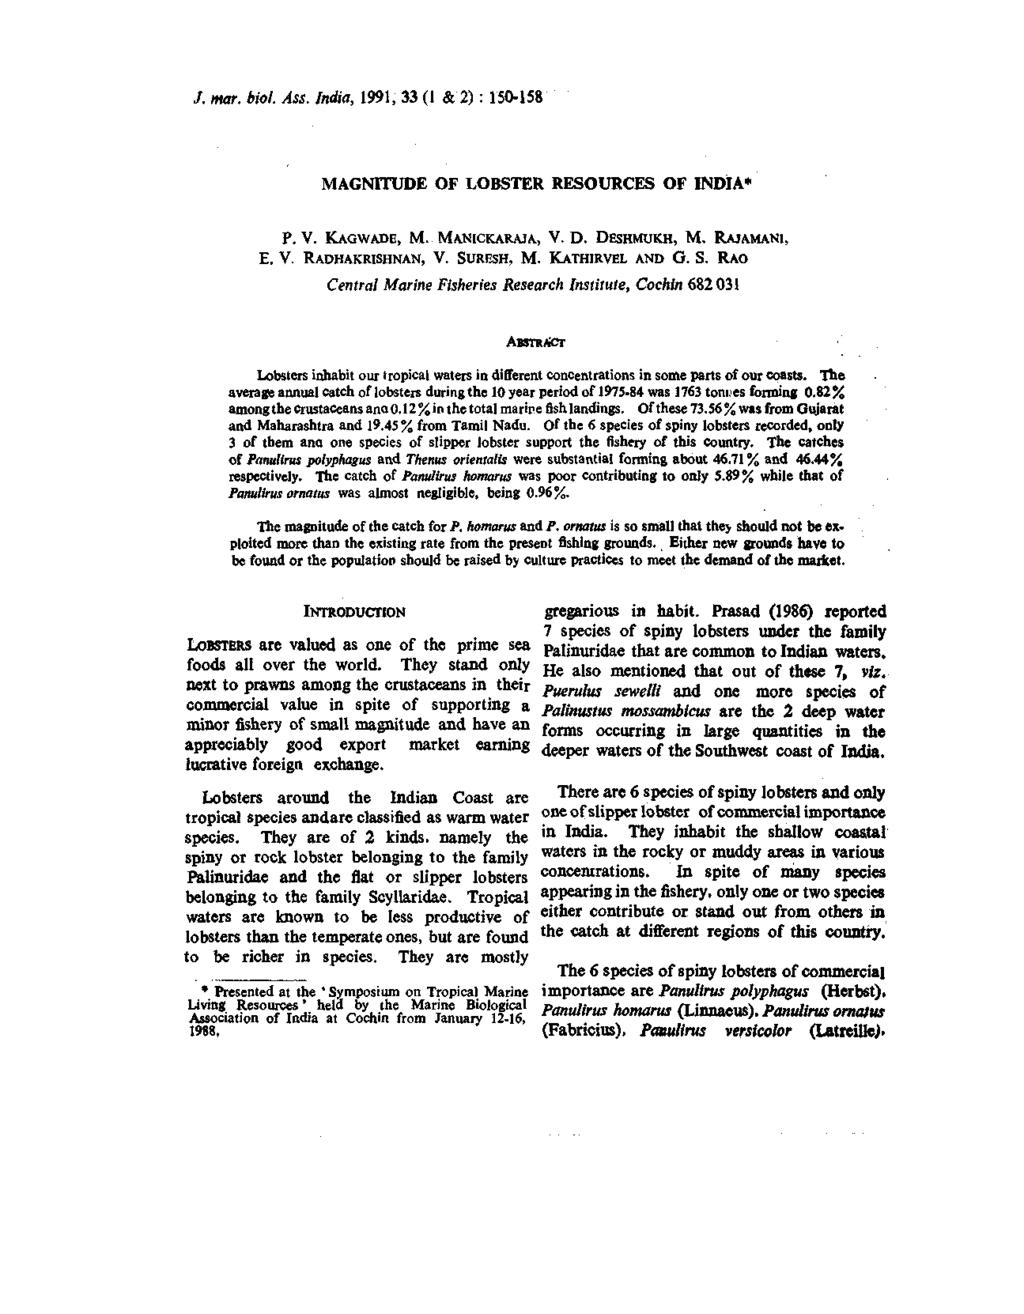 /. mar. biol. Ass. India, 1991, 33 (1 & 2); 150-158 MAGNITUDE OF LOBSTER RESOURCES OF INDIA* P. V. KAGWADE, M. MANICKARAJA, V. D. DESHMUKH, M. RAJAMANI, E. V. RADHAKRISHNAN, V. SURESH, M.